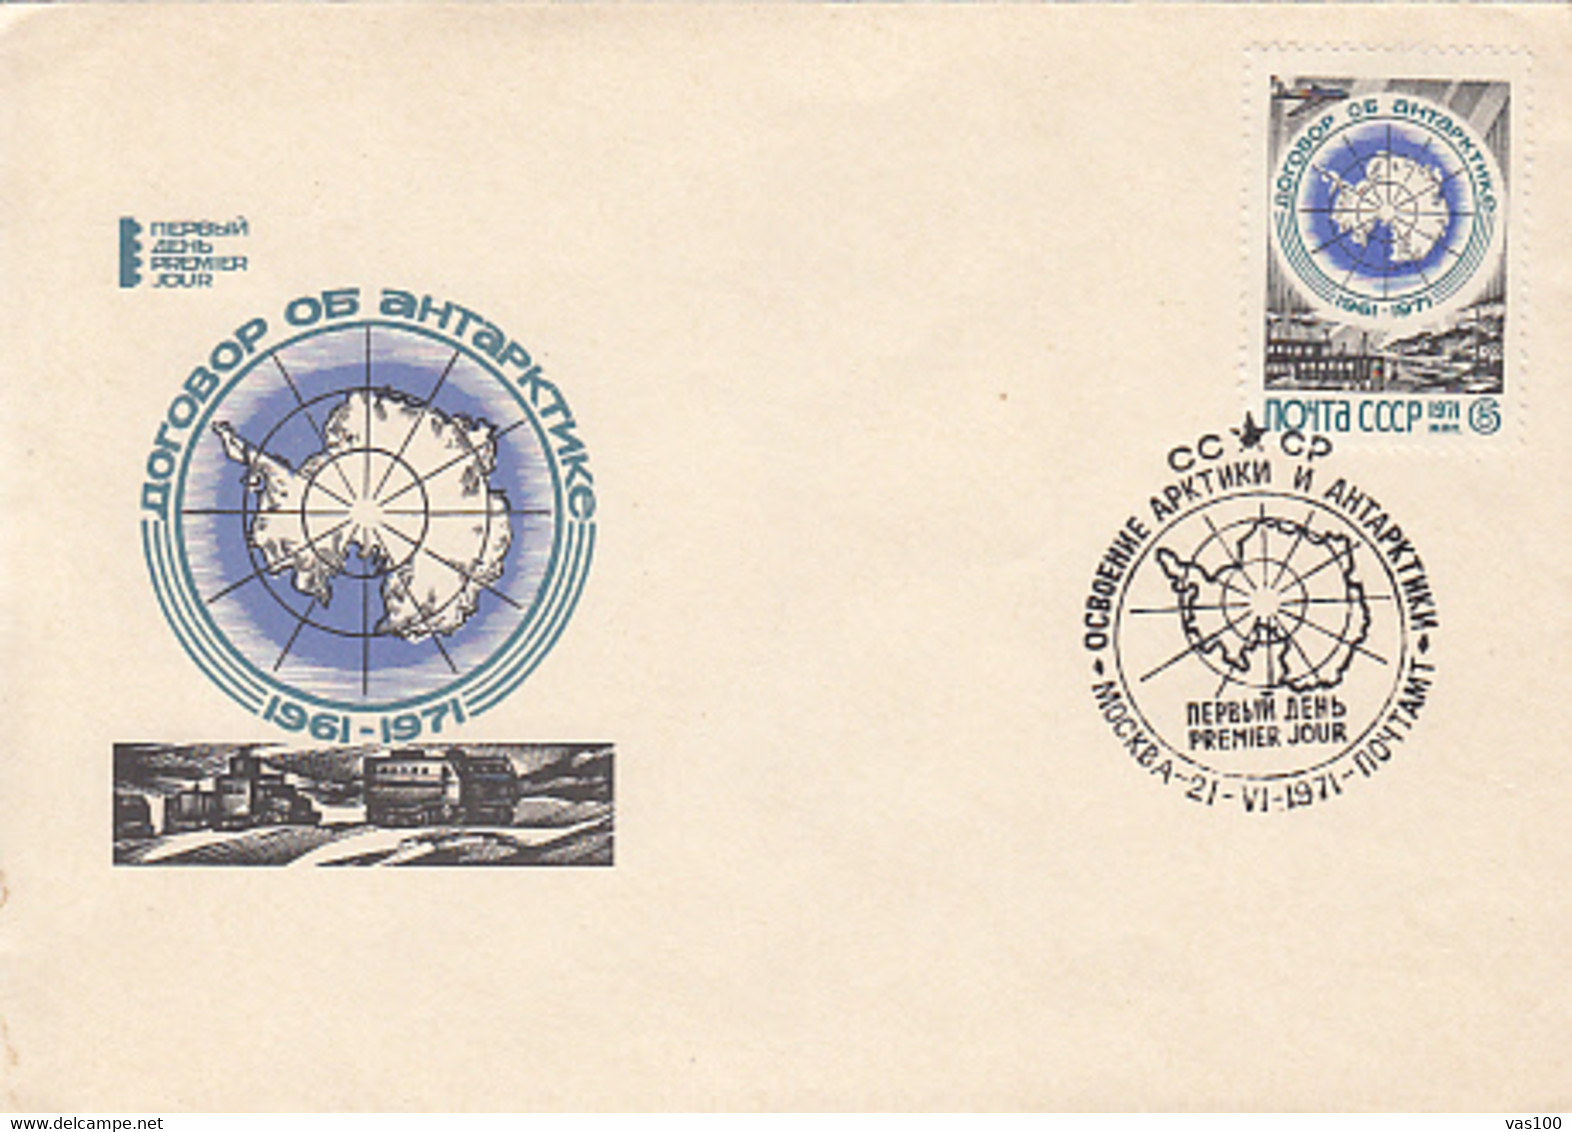 SOUTH POLE, ANTARCTIC TREATY, COVER FDC, 1971, RUSSIA - Antarktisvertrag